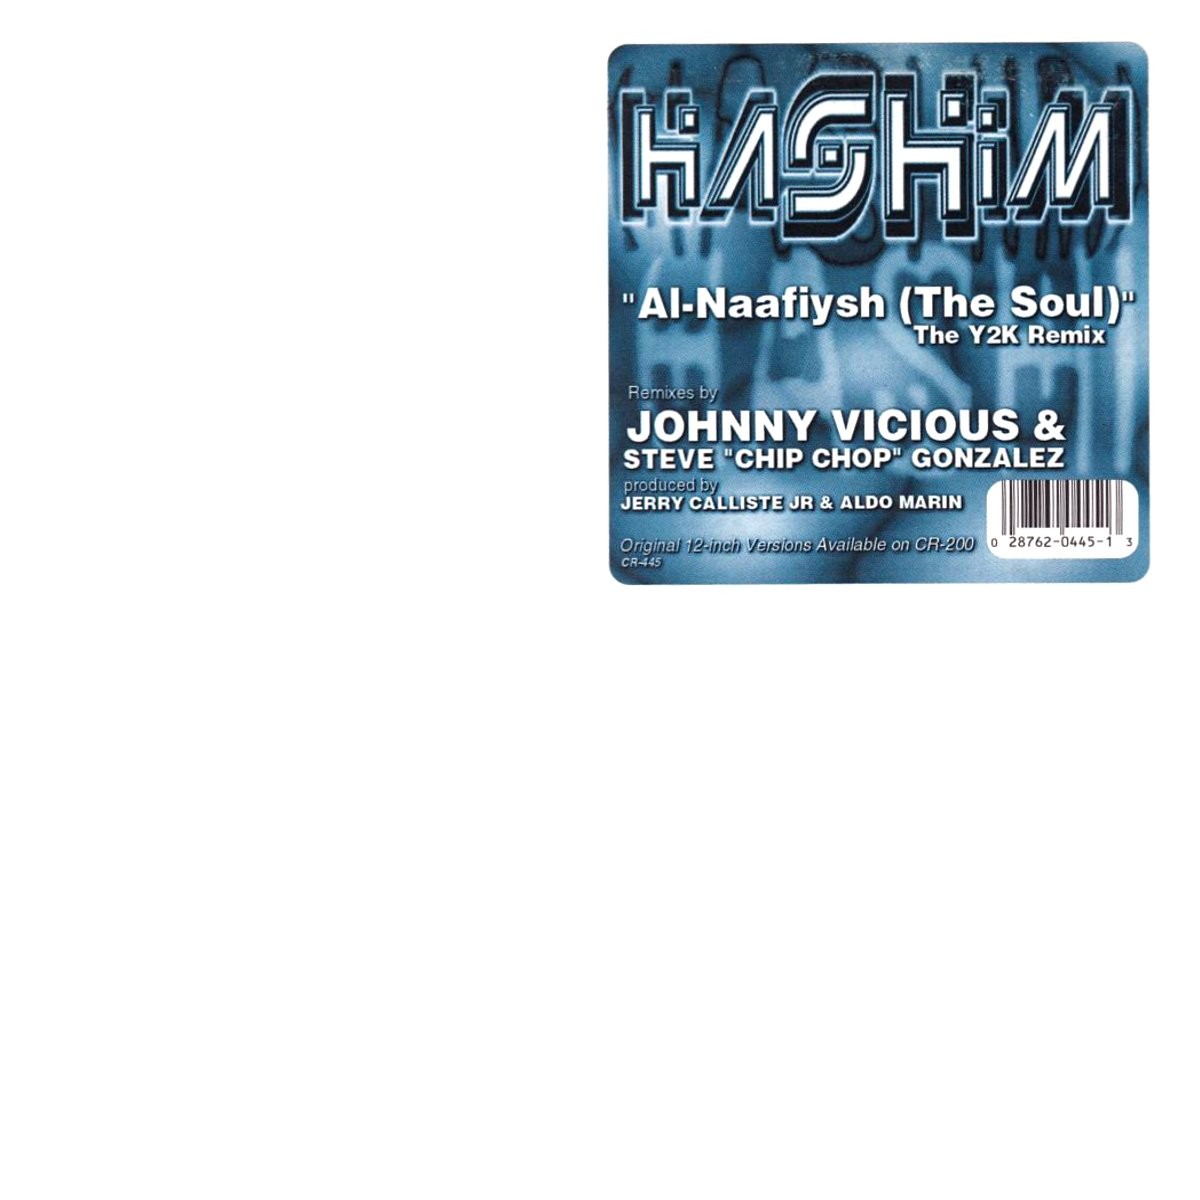 Hashim - Al naafiysh (The soul) Johnny Vicious Remix / Rock It Dont Stop Entropic mix (12" Vinyl Record)